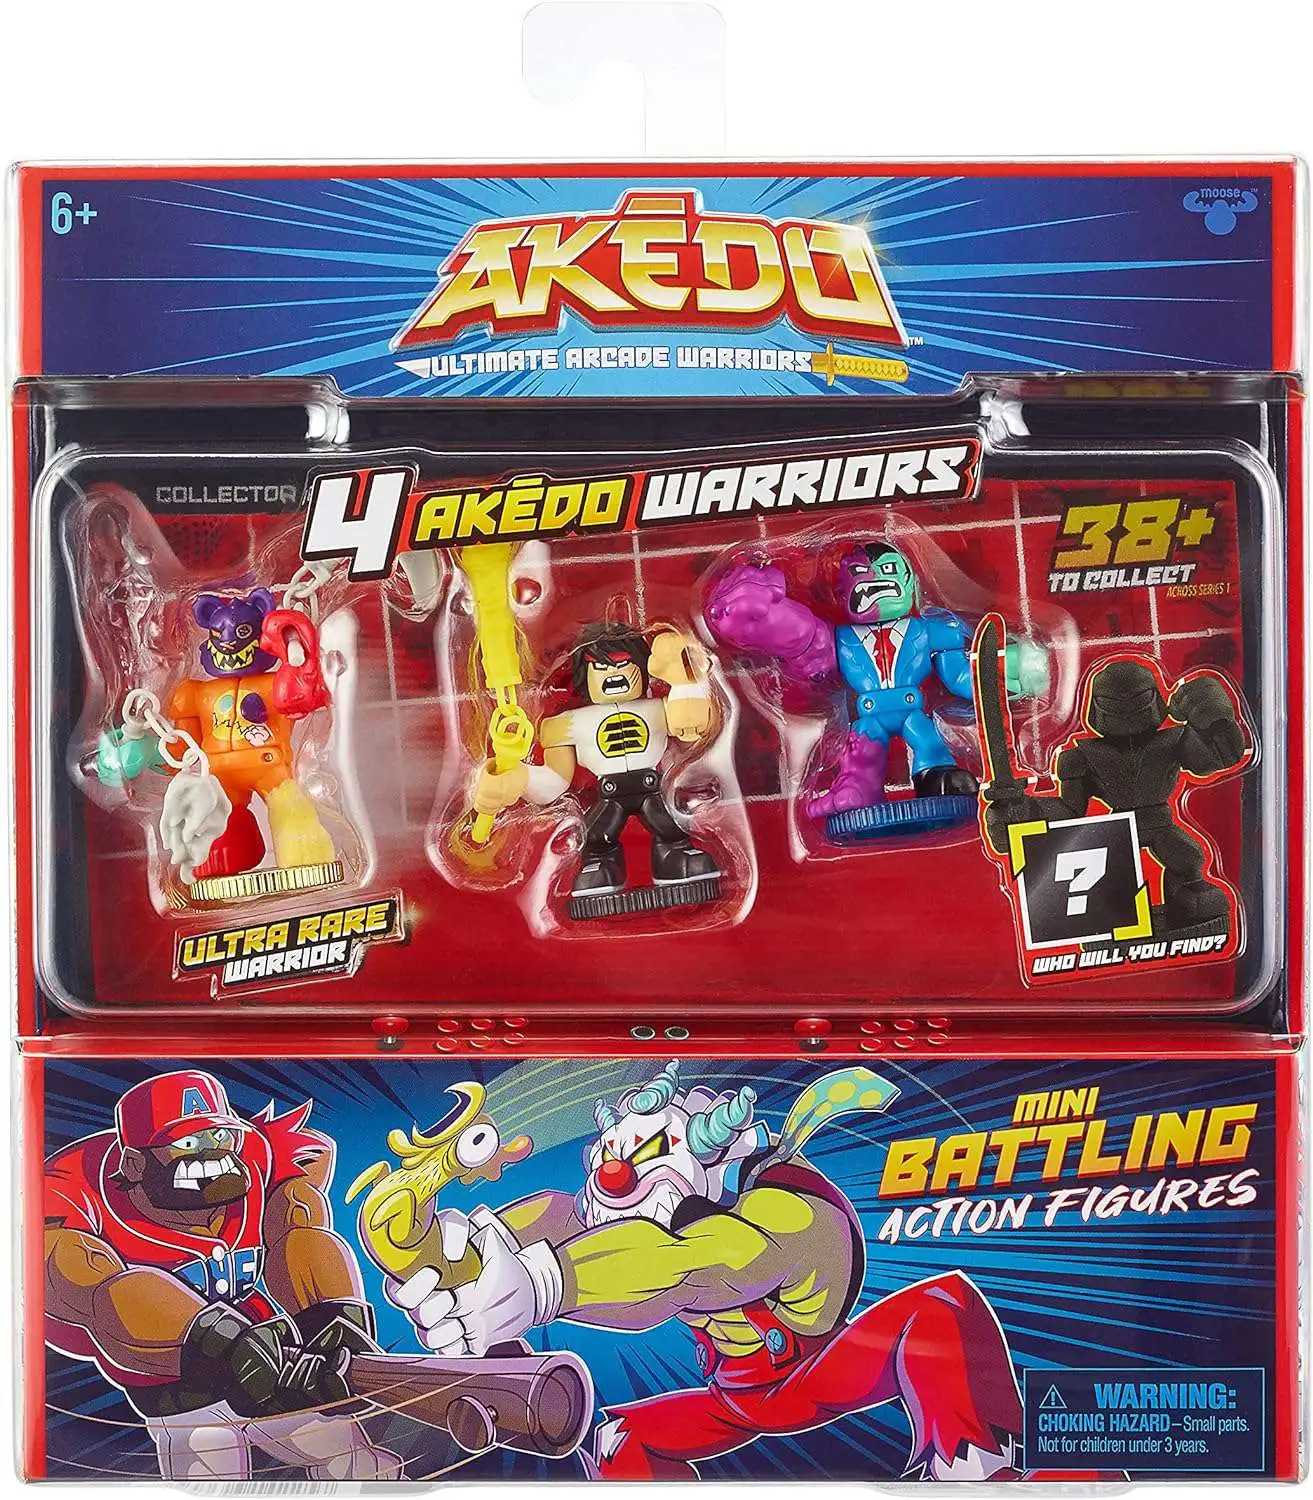 Legends of Akedo Powerstorm Warrior Collector 4Pack Mini Battling Action  Figures